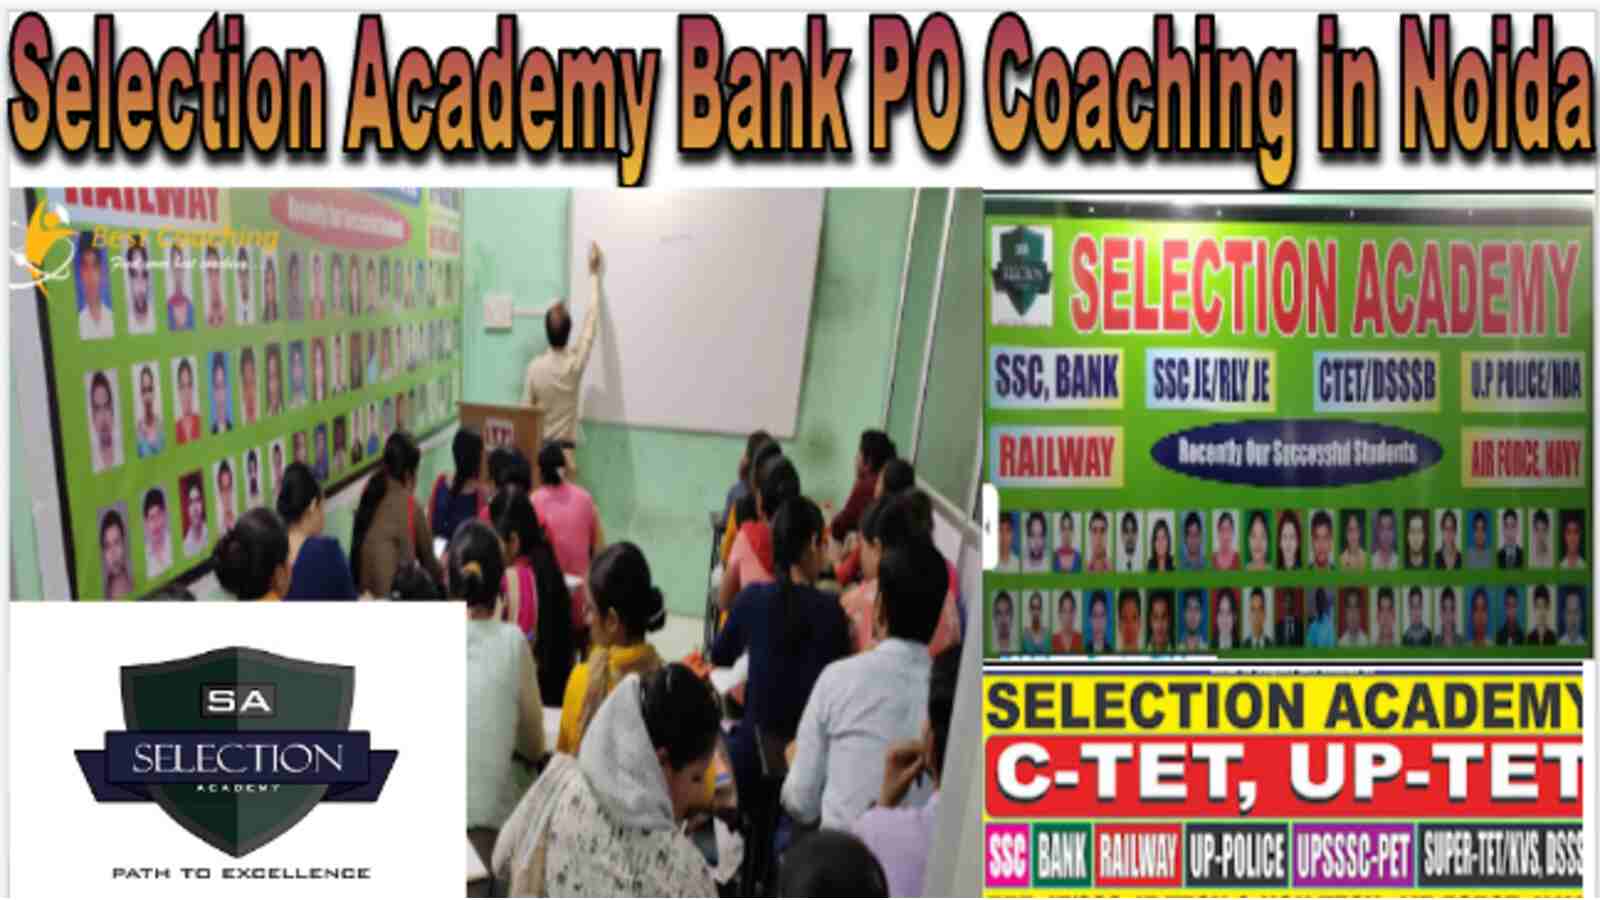 Selection Academy Bank PO Coaching in Noida